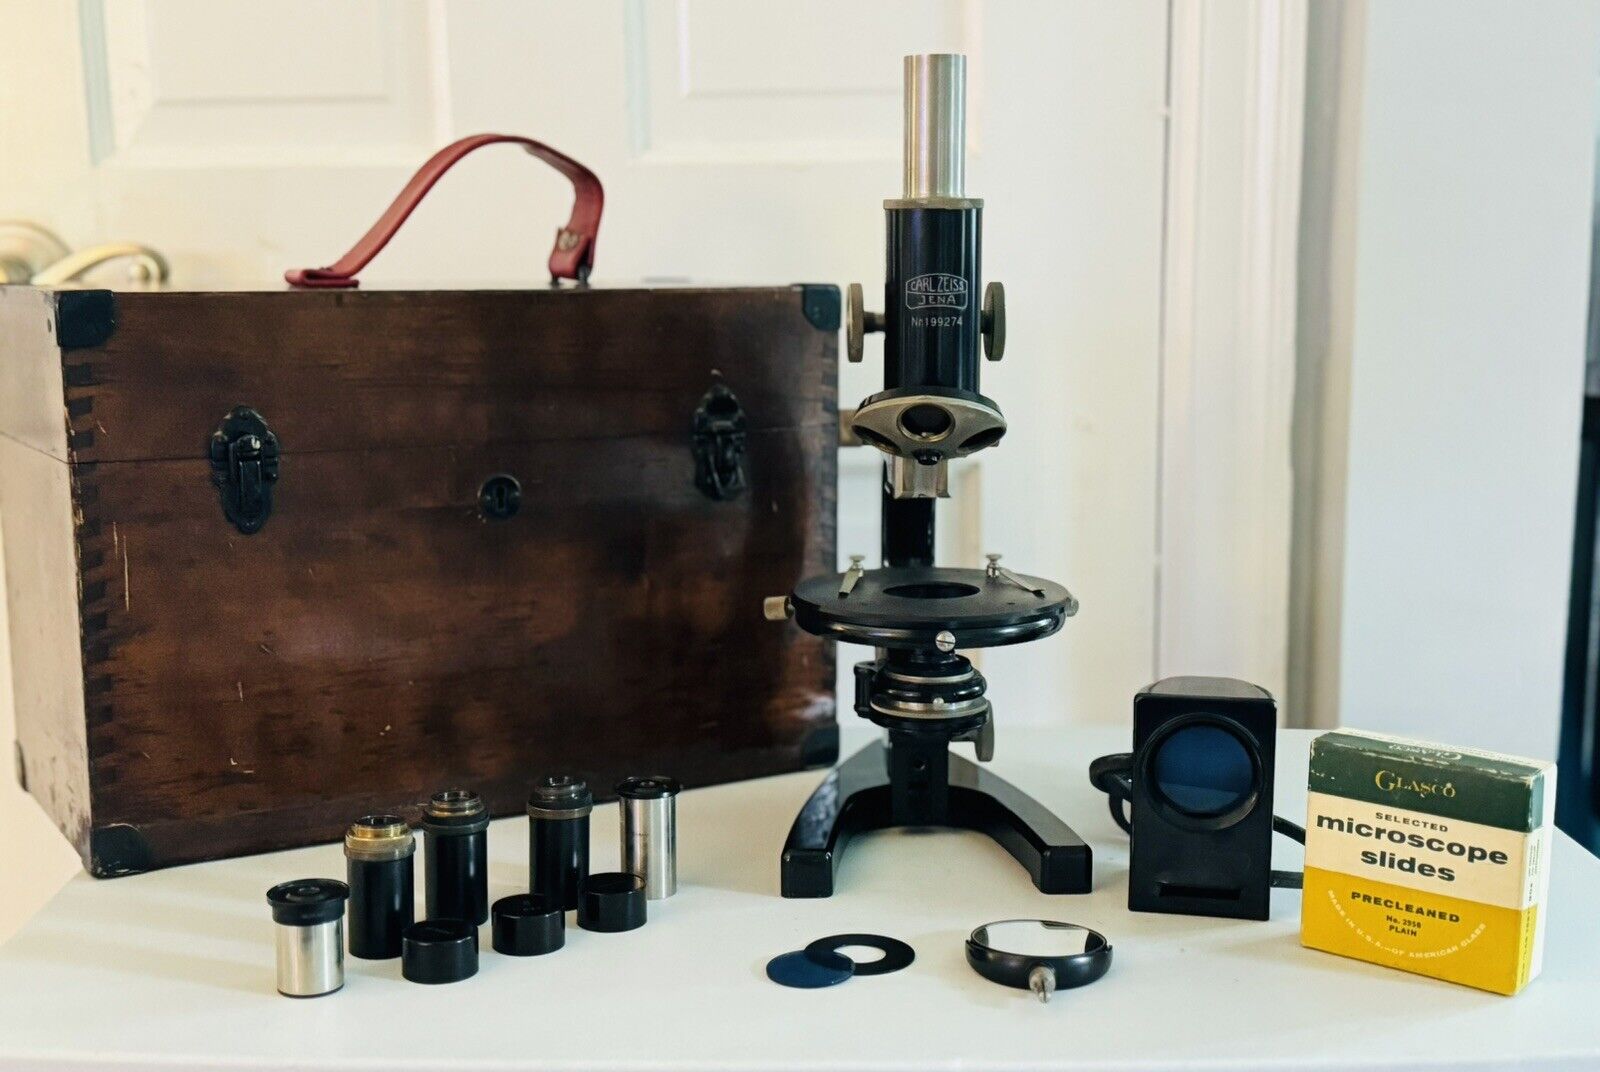 VINTAGE Carl Zeiss Jena 199274 Microscope w Accessories & Original Wood Box